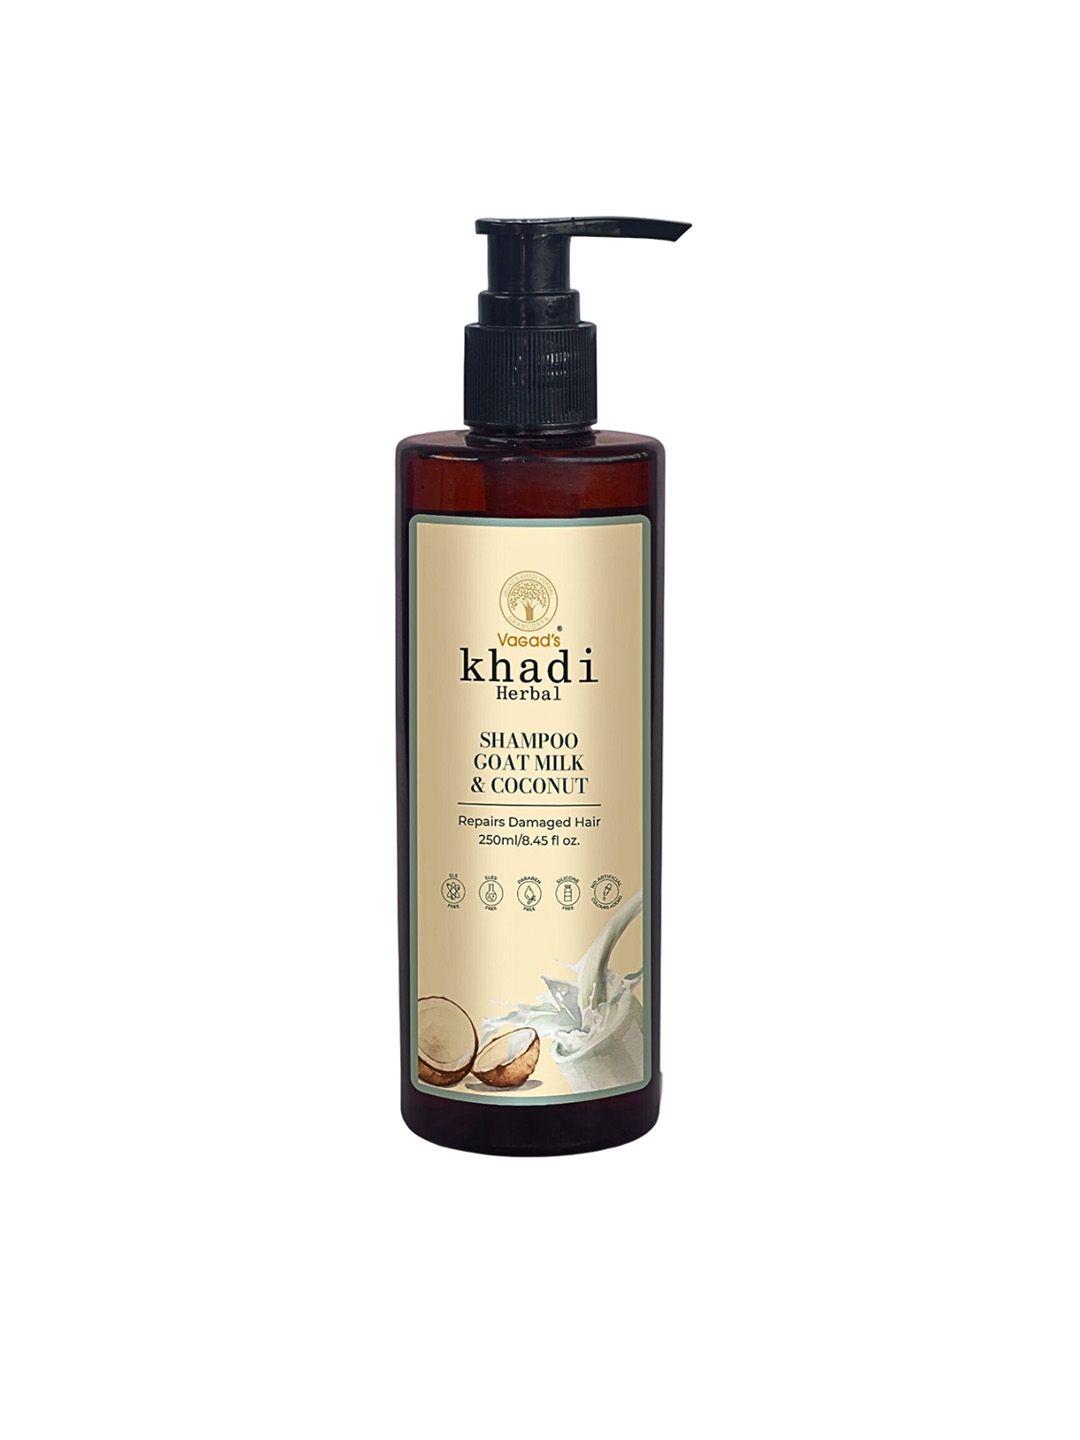 vagads khadi herbal goat milk & coconut shampoo - 250ml